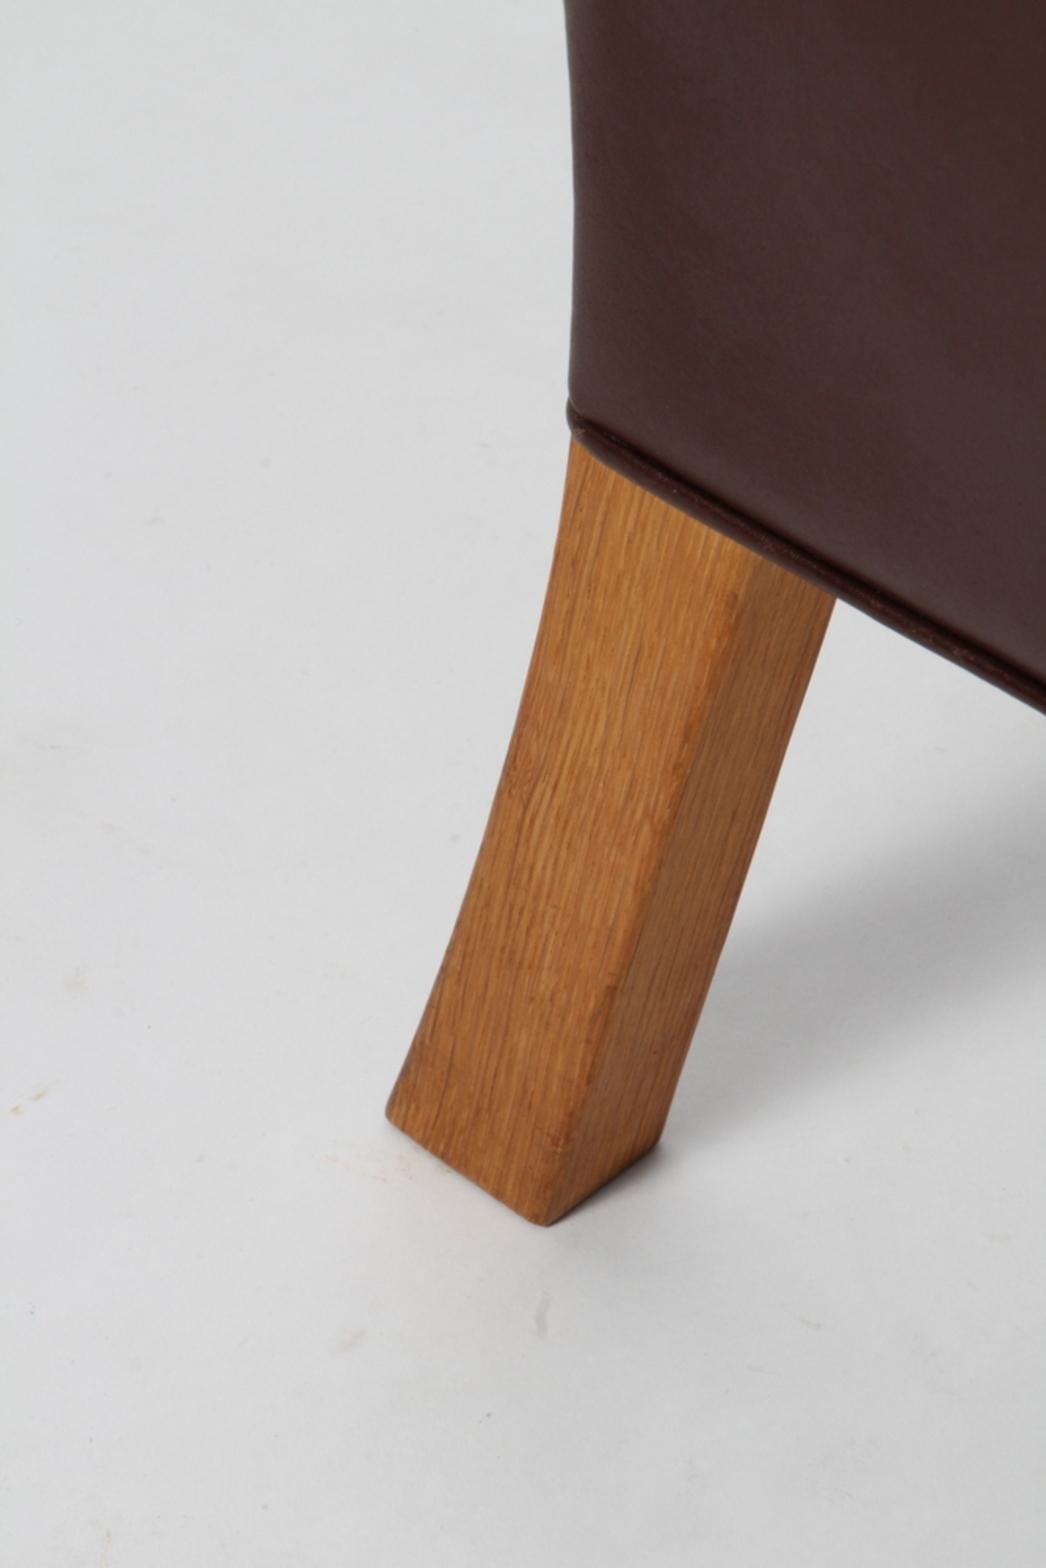 Børge Mogensen Wing Back Chair in Brown Original Leather, Model 2204 1